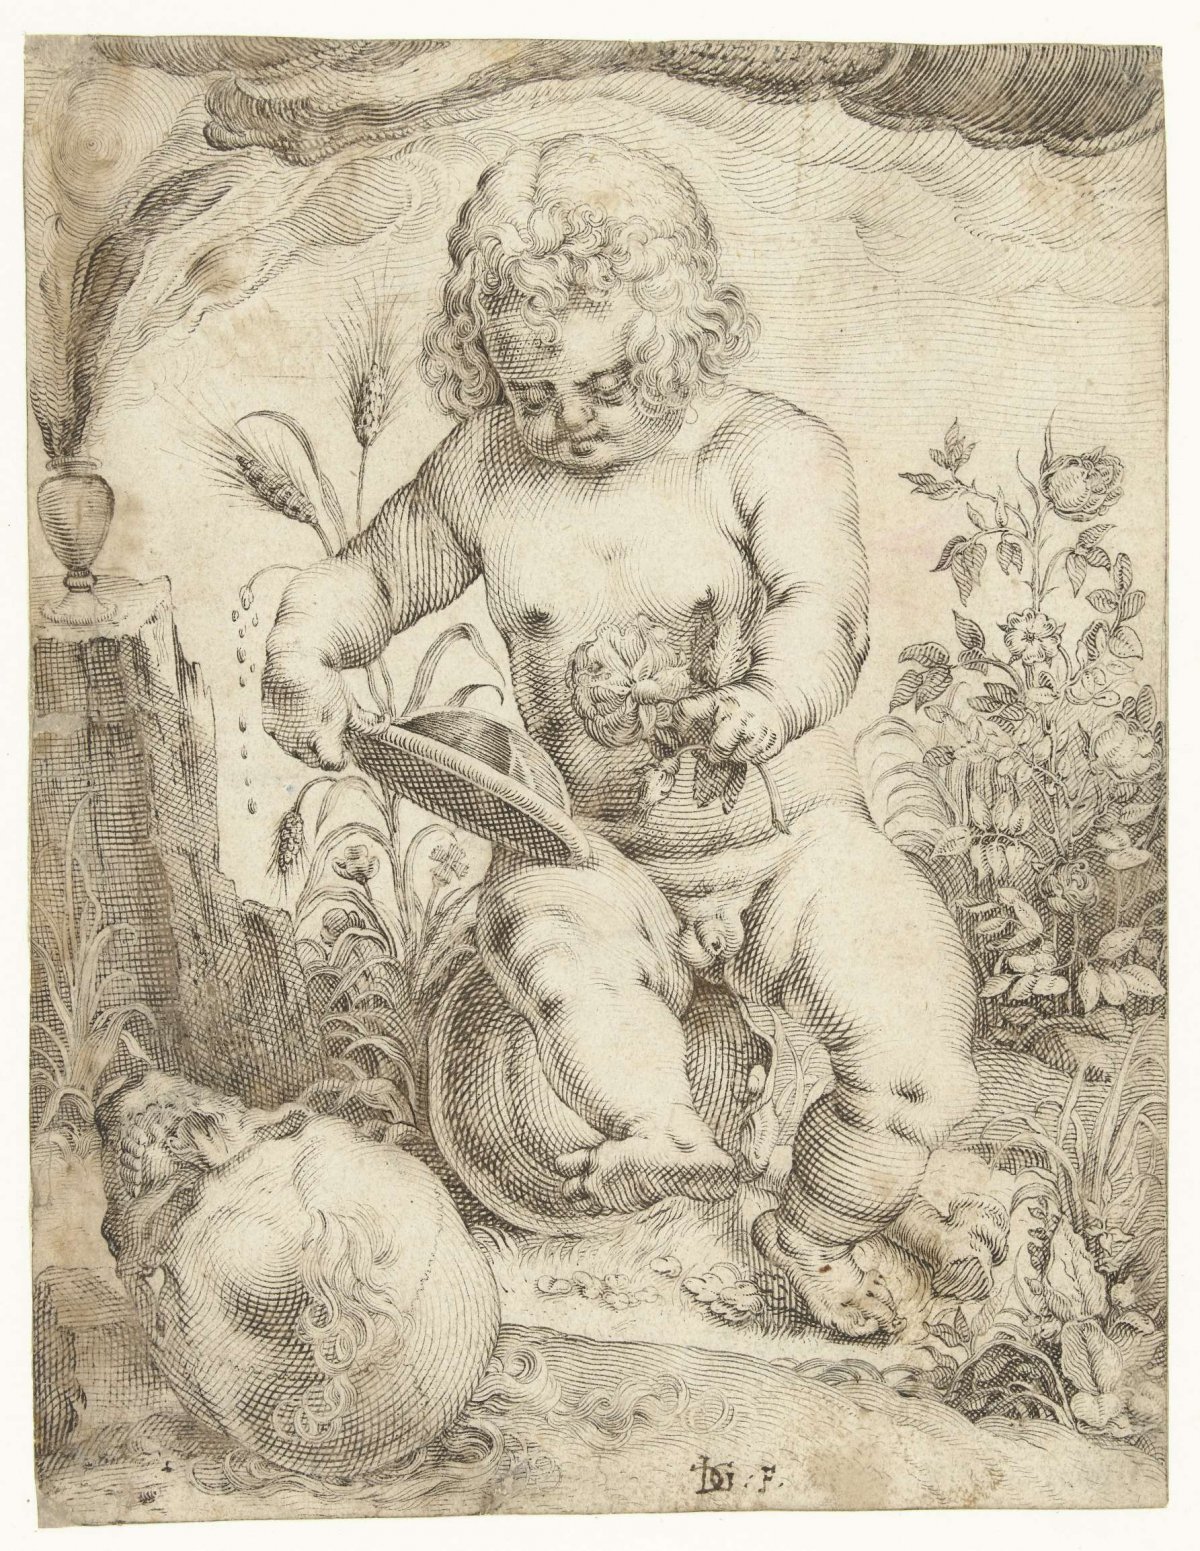 Vanitas, Jacques de Gheyn (II), 1580 - 1595